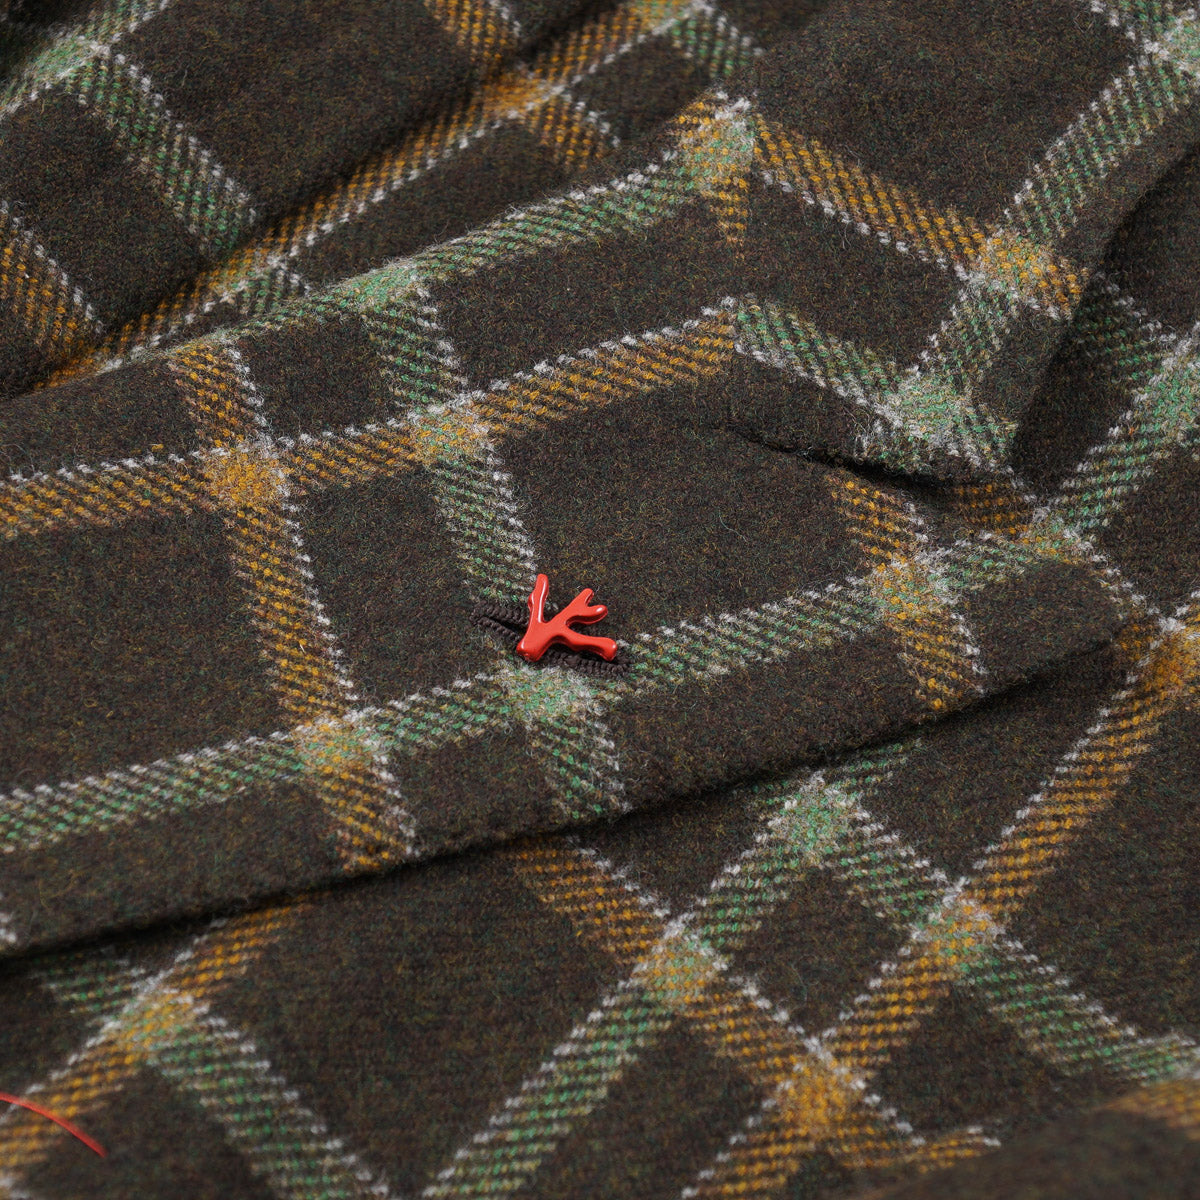 Isaia Soft Flannel Wool Sport Coat - Top Shelf Apparel